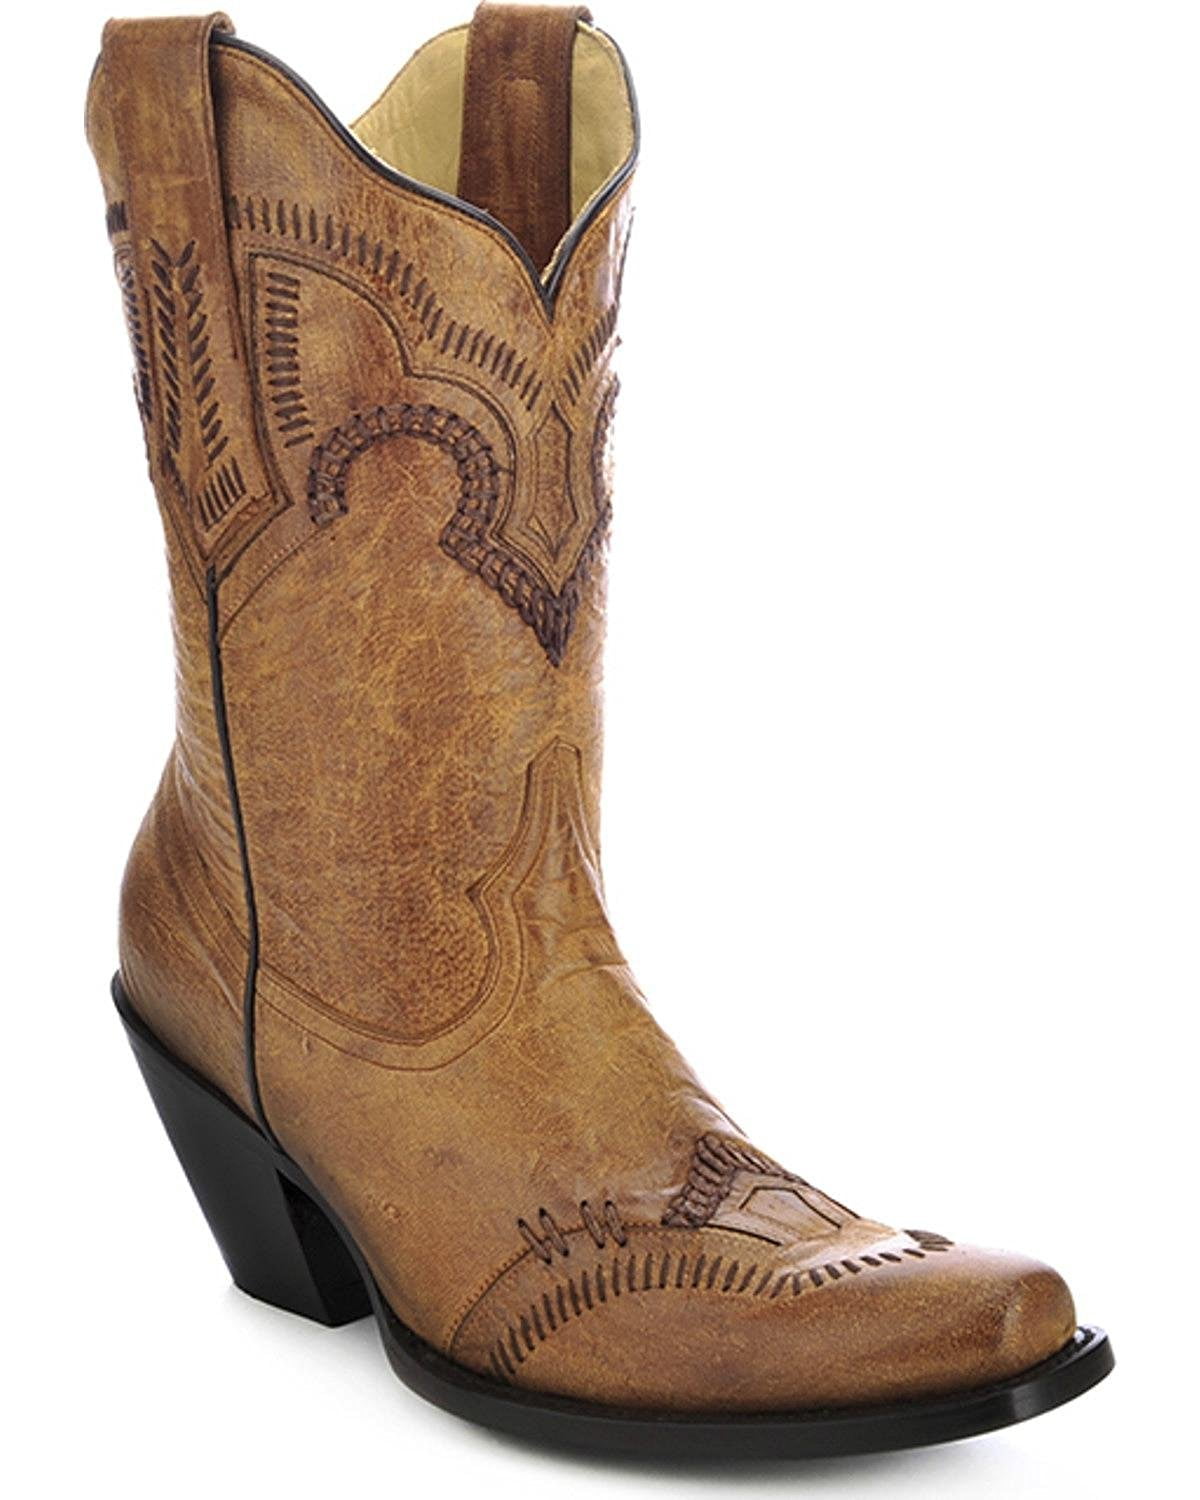 CORRAL Women's Short Cowgirl Boot Square Toe Tan 10 M US - Walmart.com